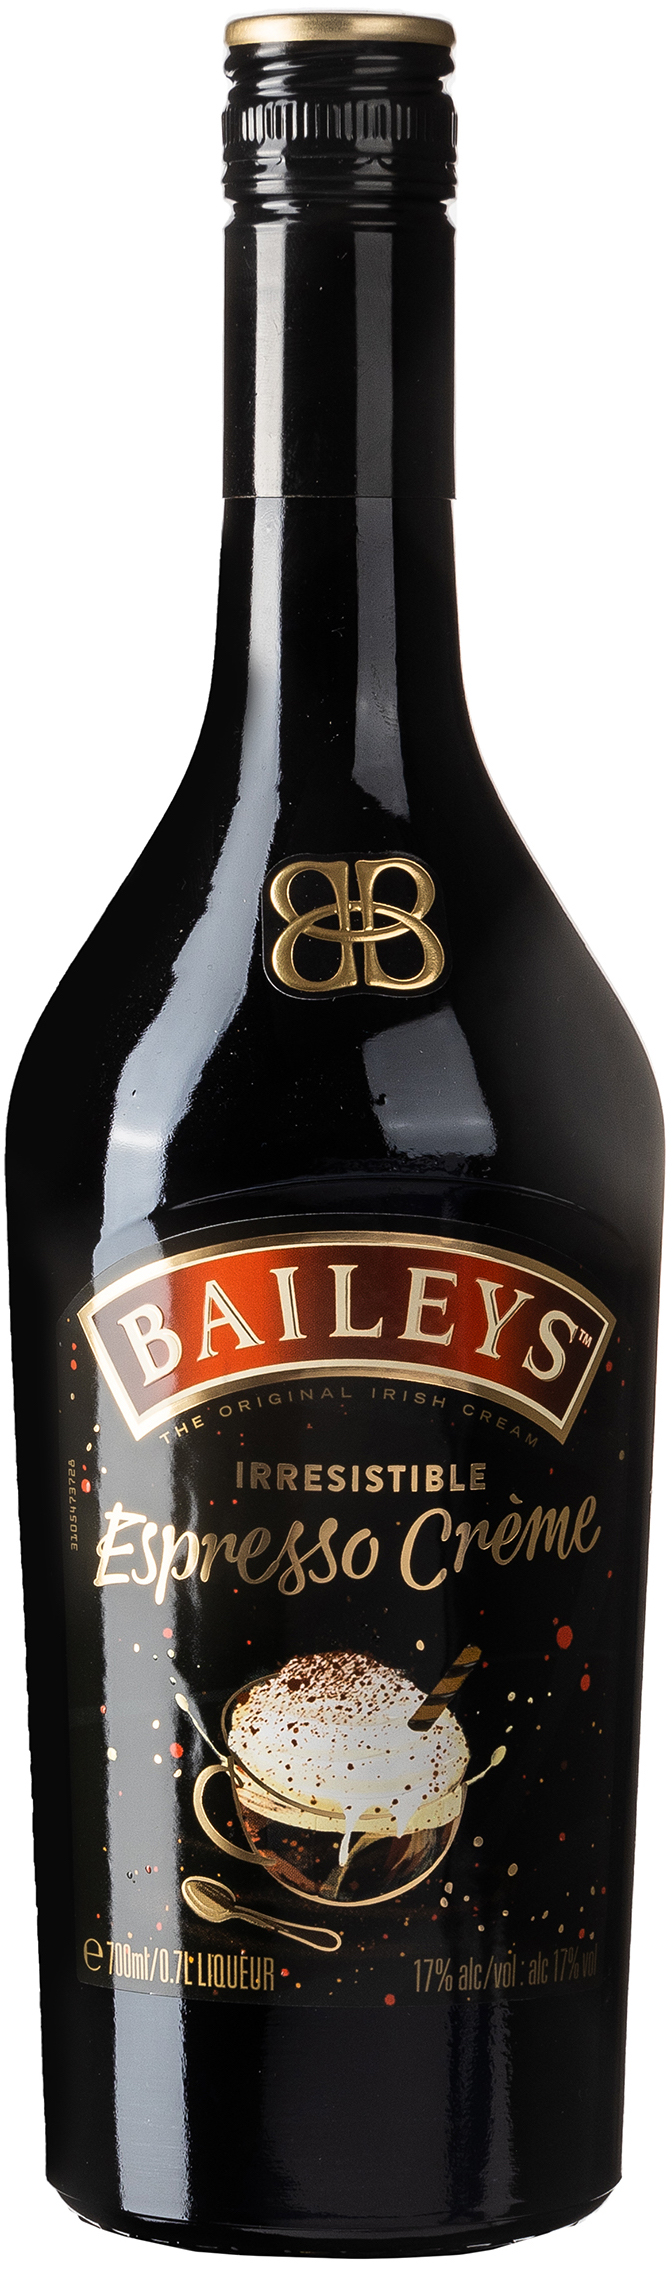 Baileys Espresso Crème Irish Cream Likör 17% vol. 0,7L